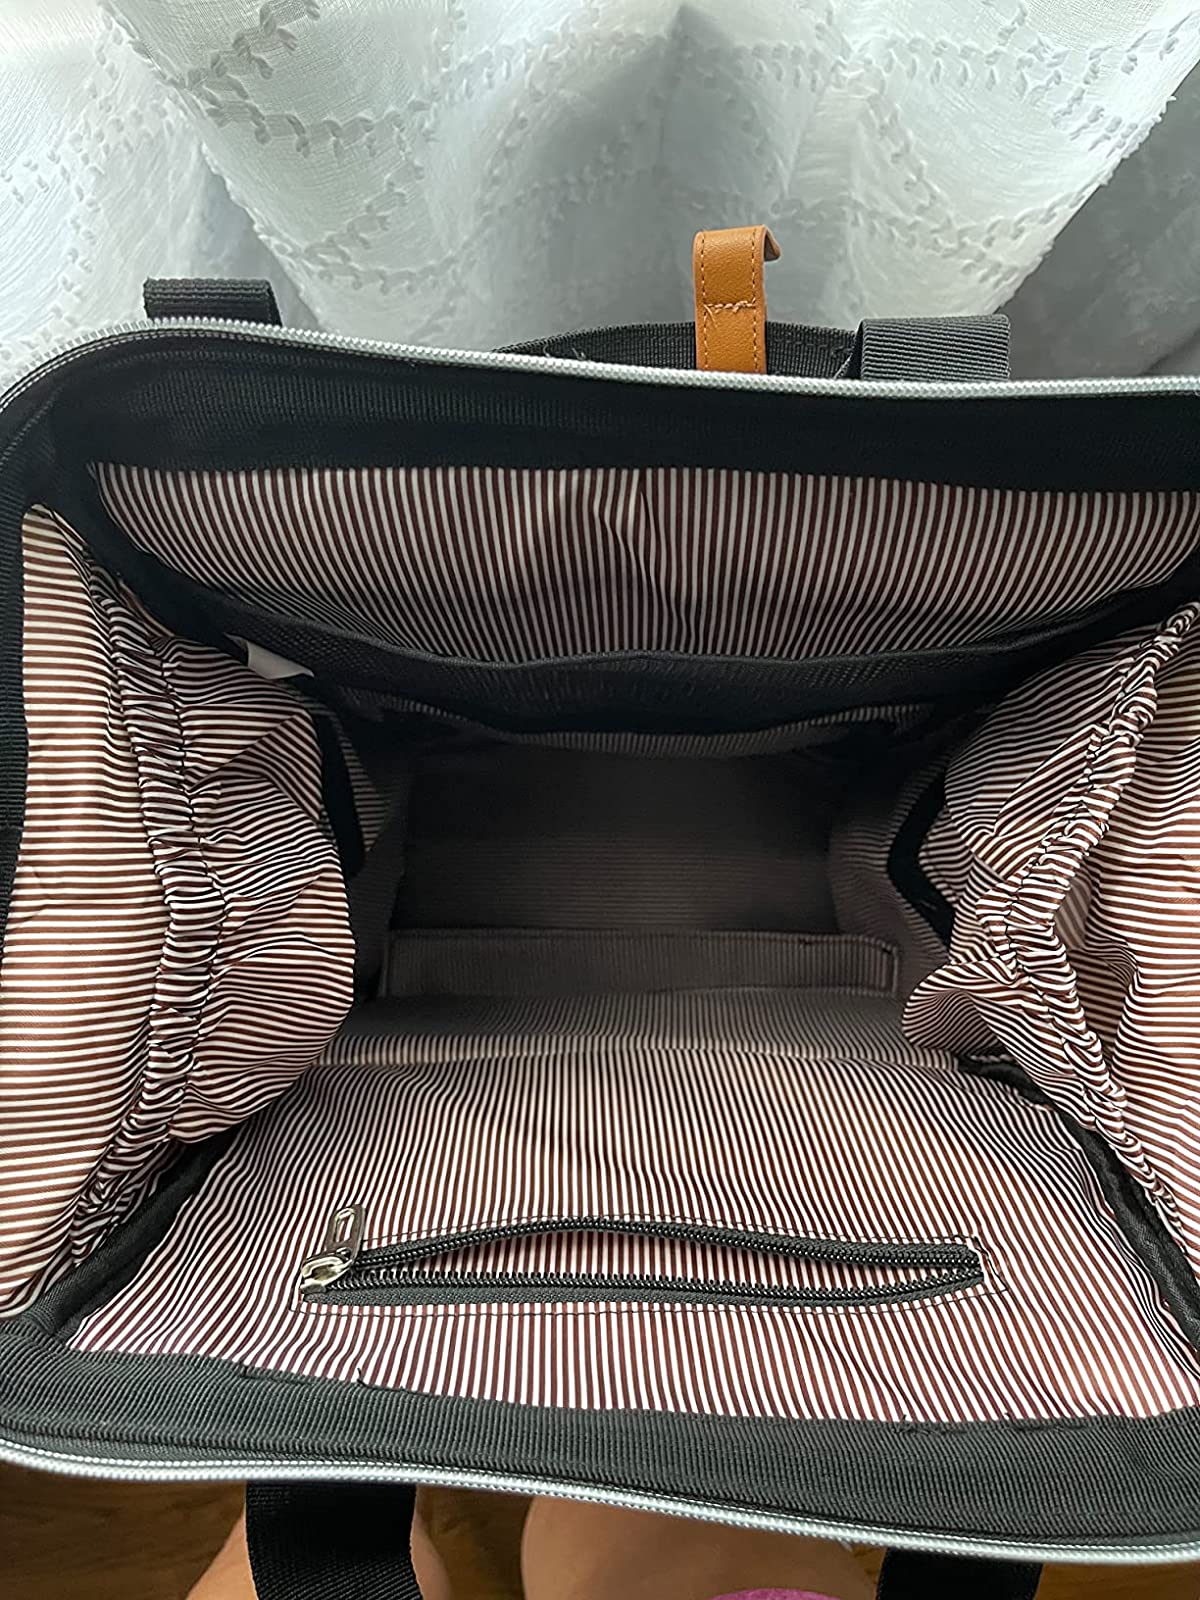 Best Hap Tim Diaper Bag Backpack,Large Capacity Travel Back Pack ...